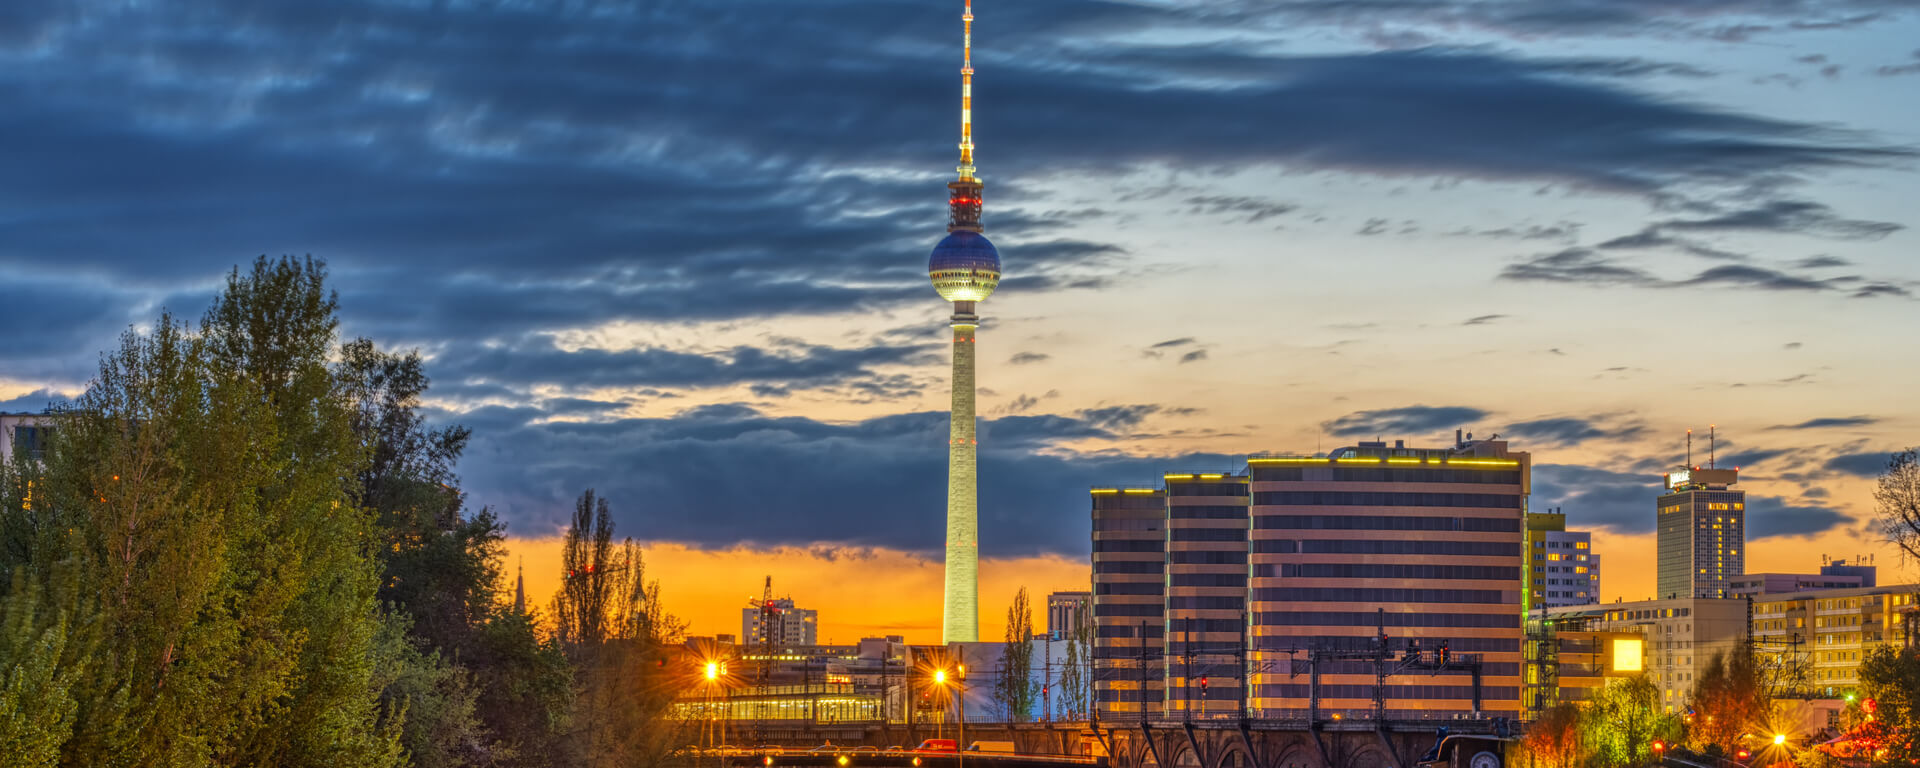 berlin city centre